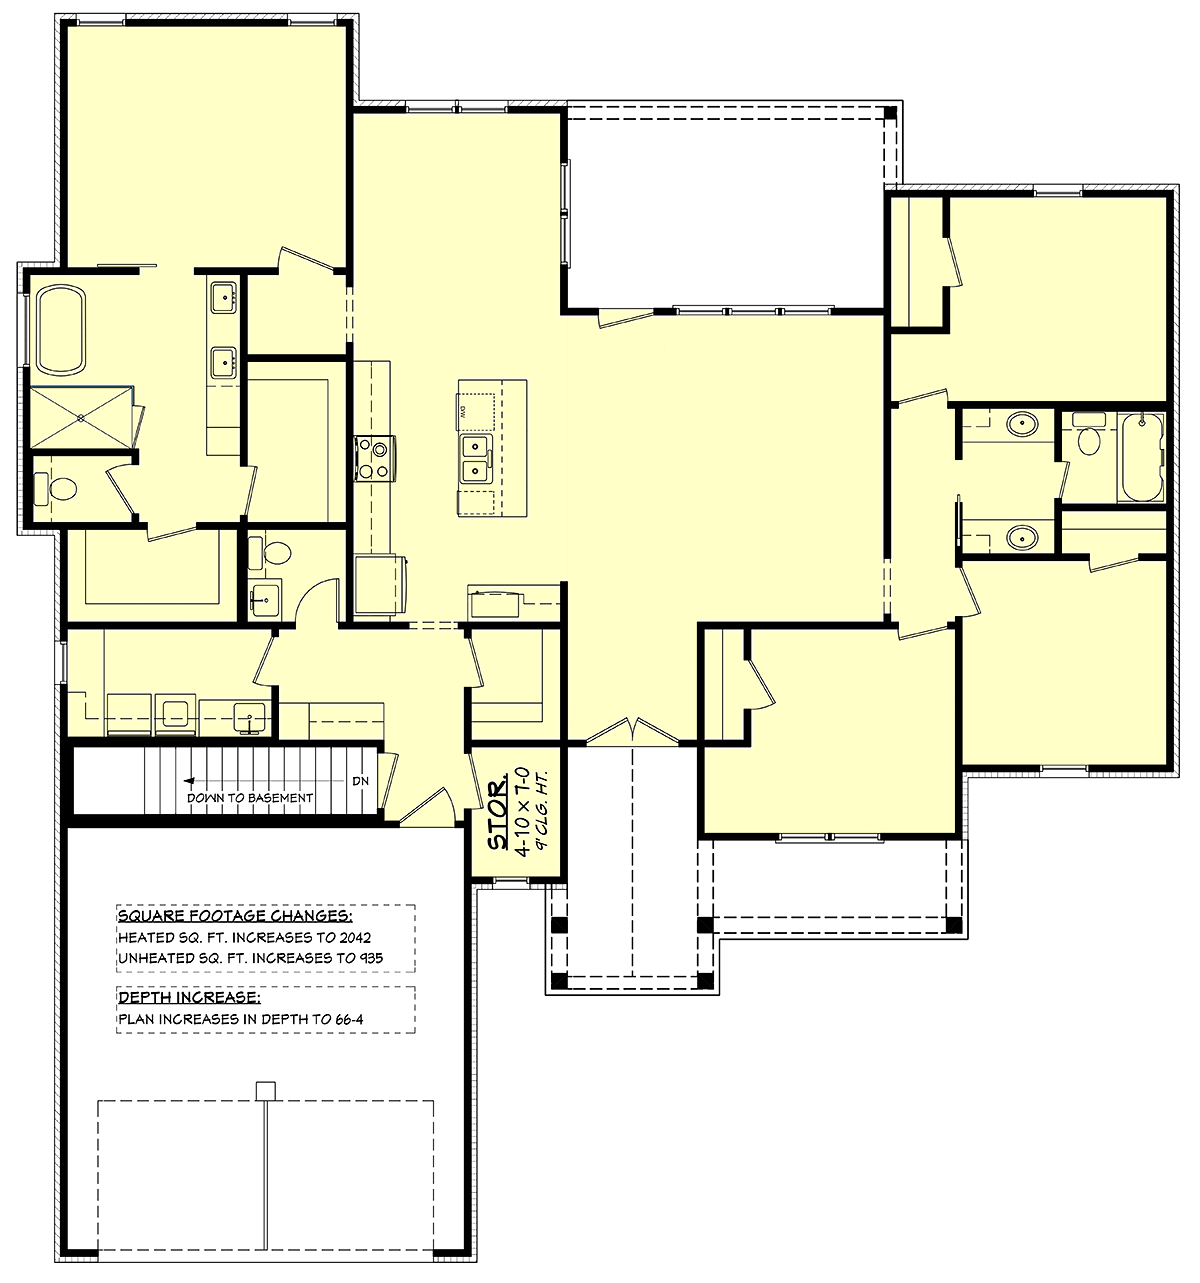 House Plan 80873 Alternate Level One